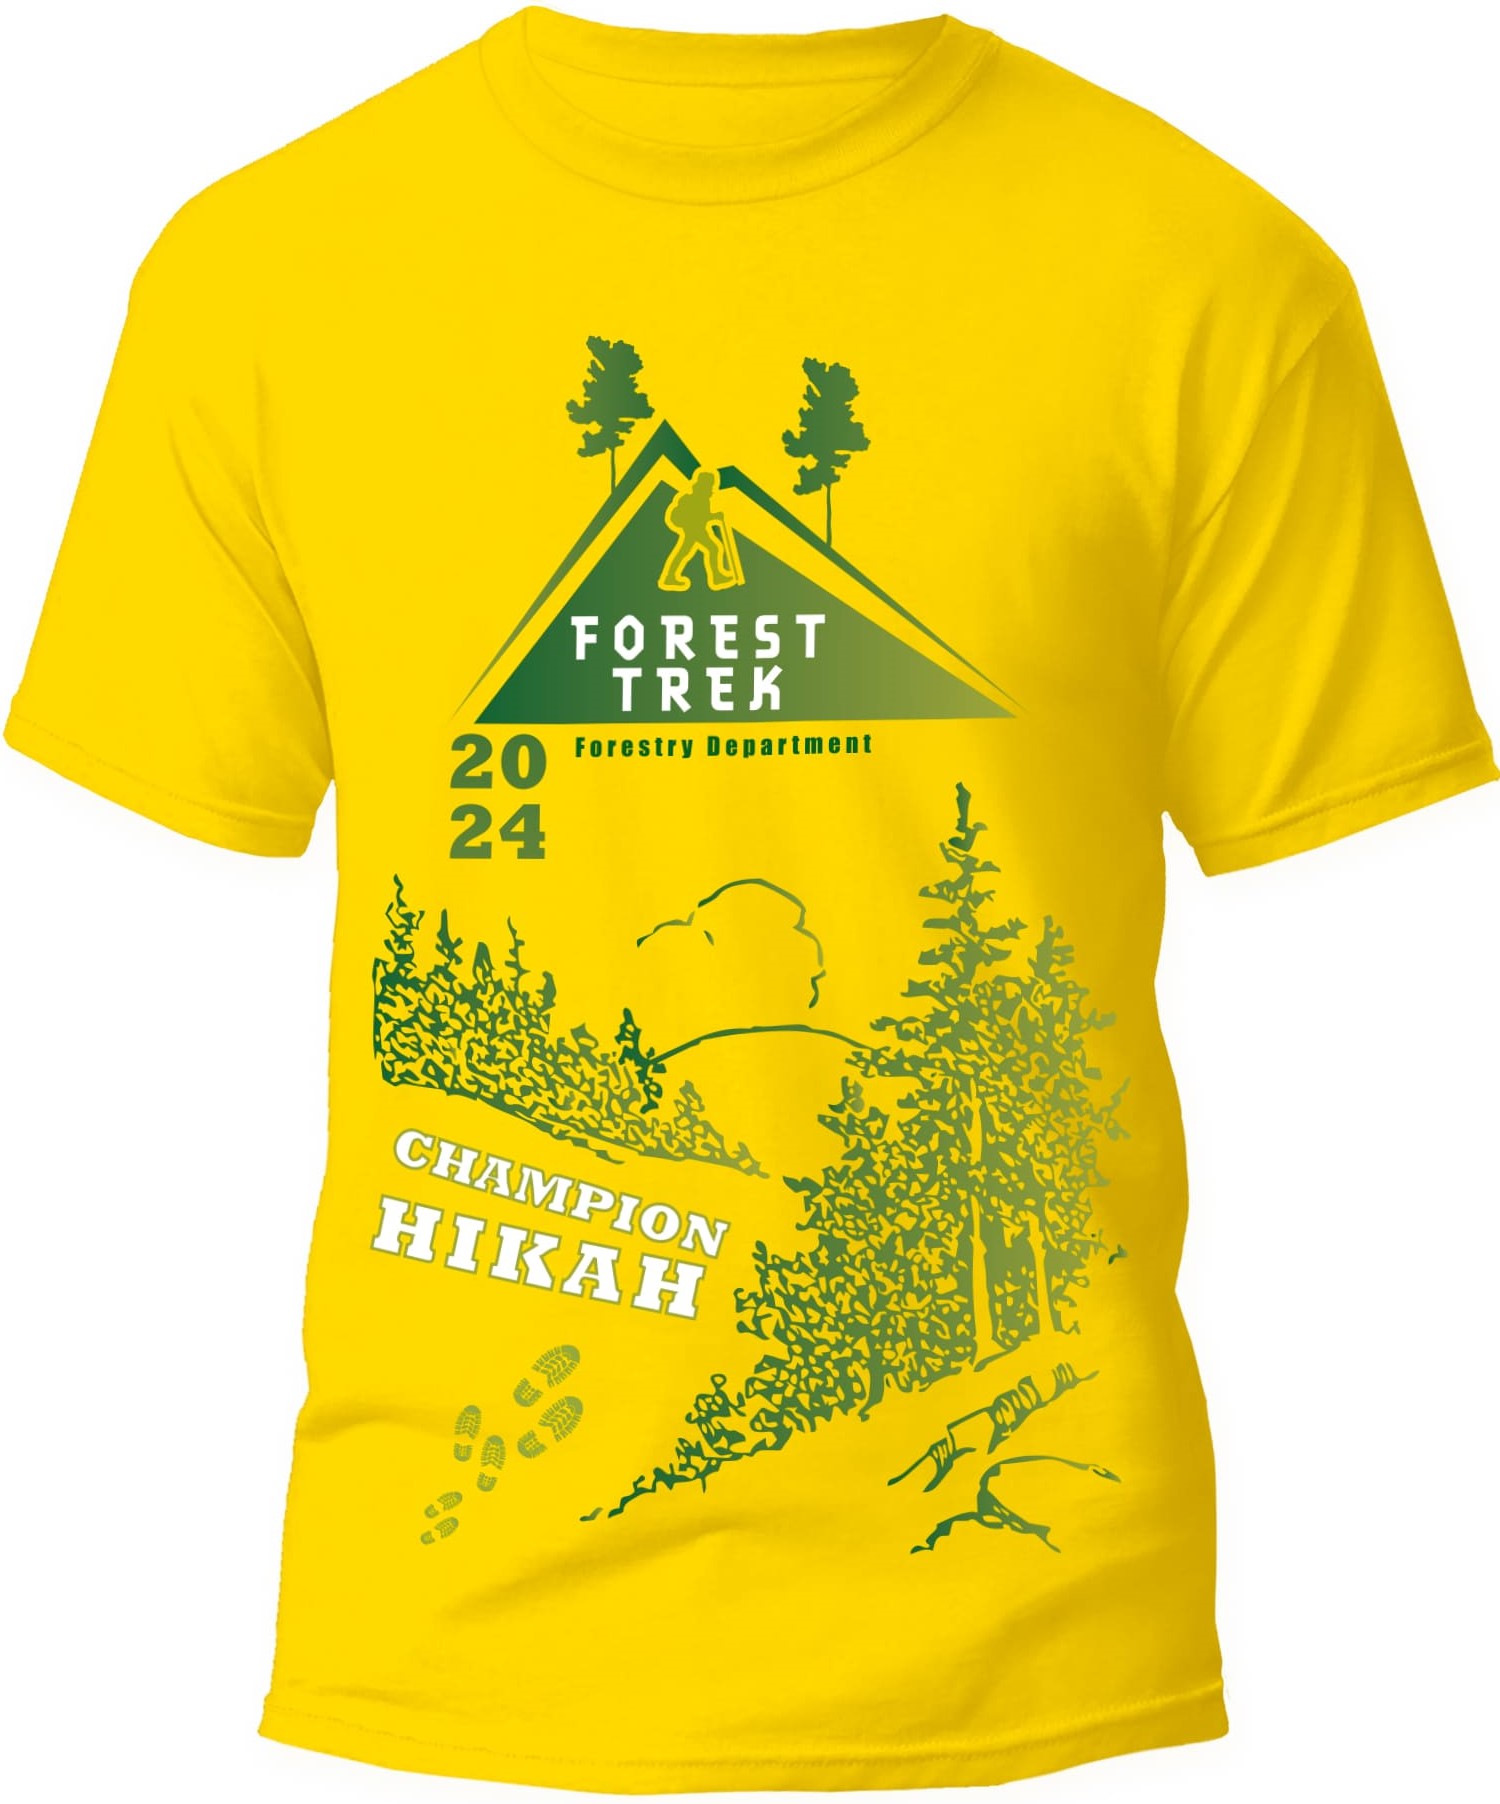 Forest Trek Champion Hikah - Adult Yellow